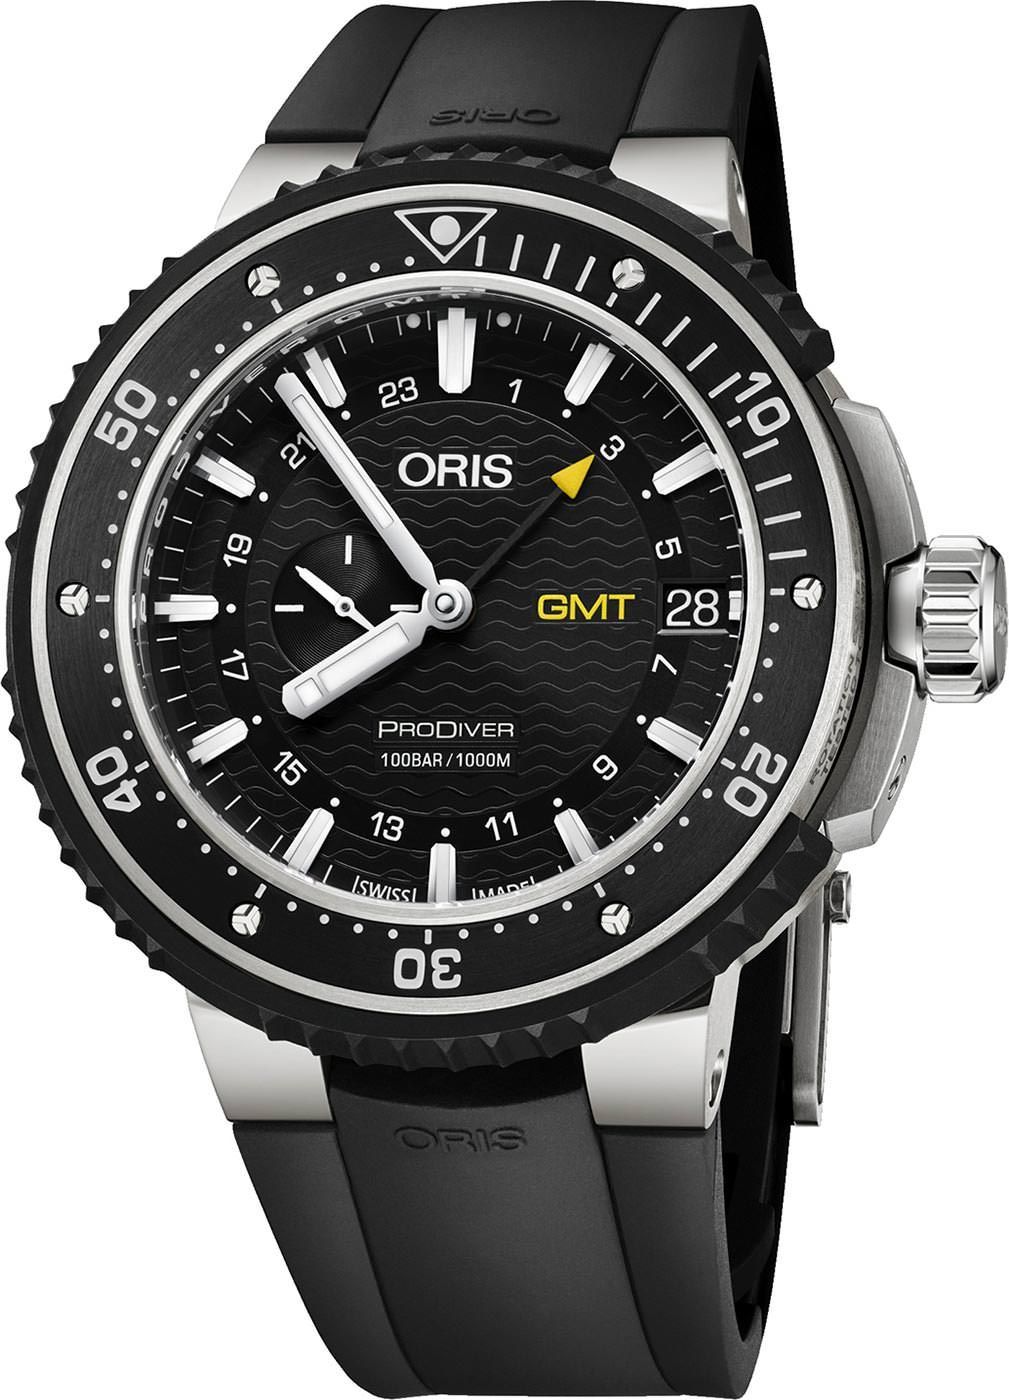 Oris ProDiver ProDiver GMT Black Dial 49 mm Automatic Watch For Men - 1